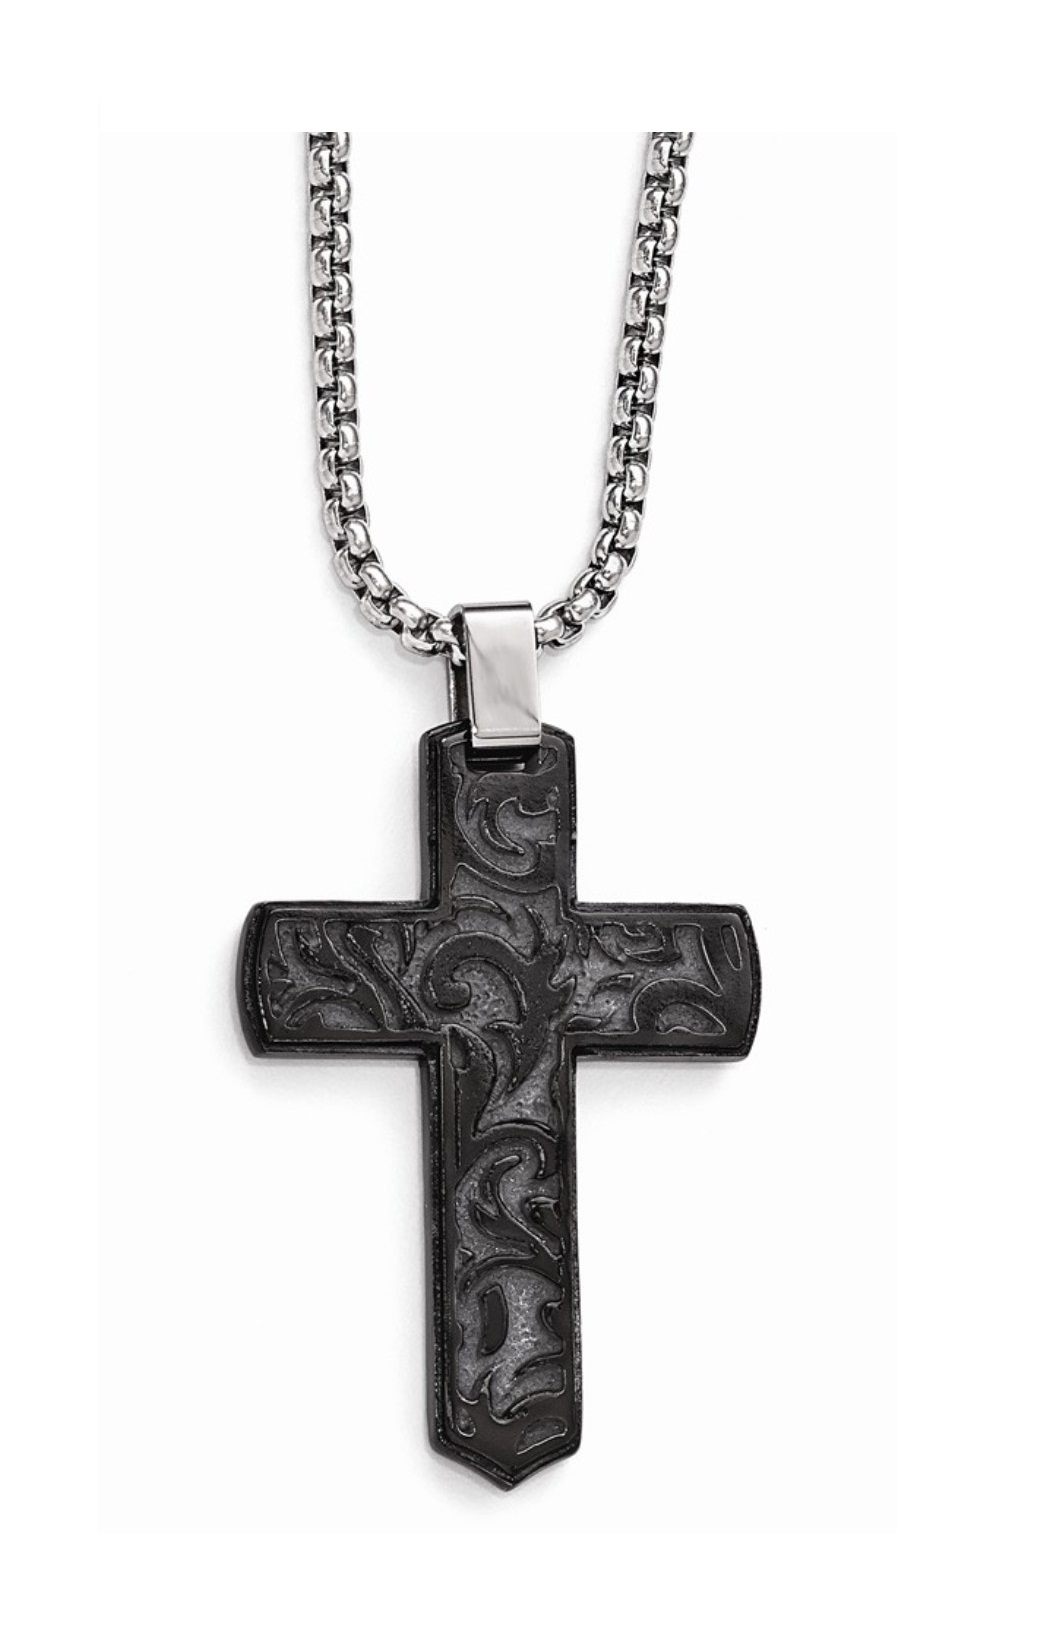  Black Ti Casted Cross Pendant Necklace